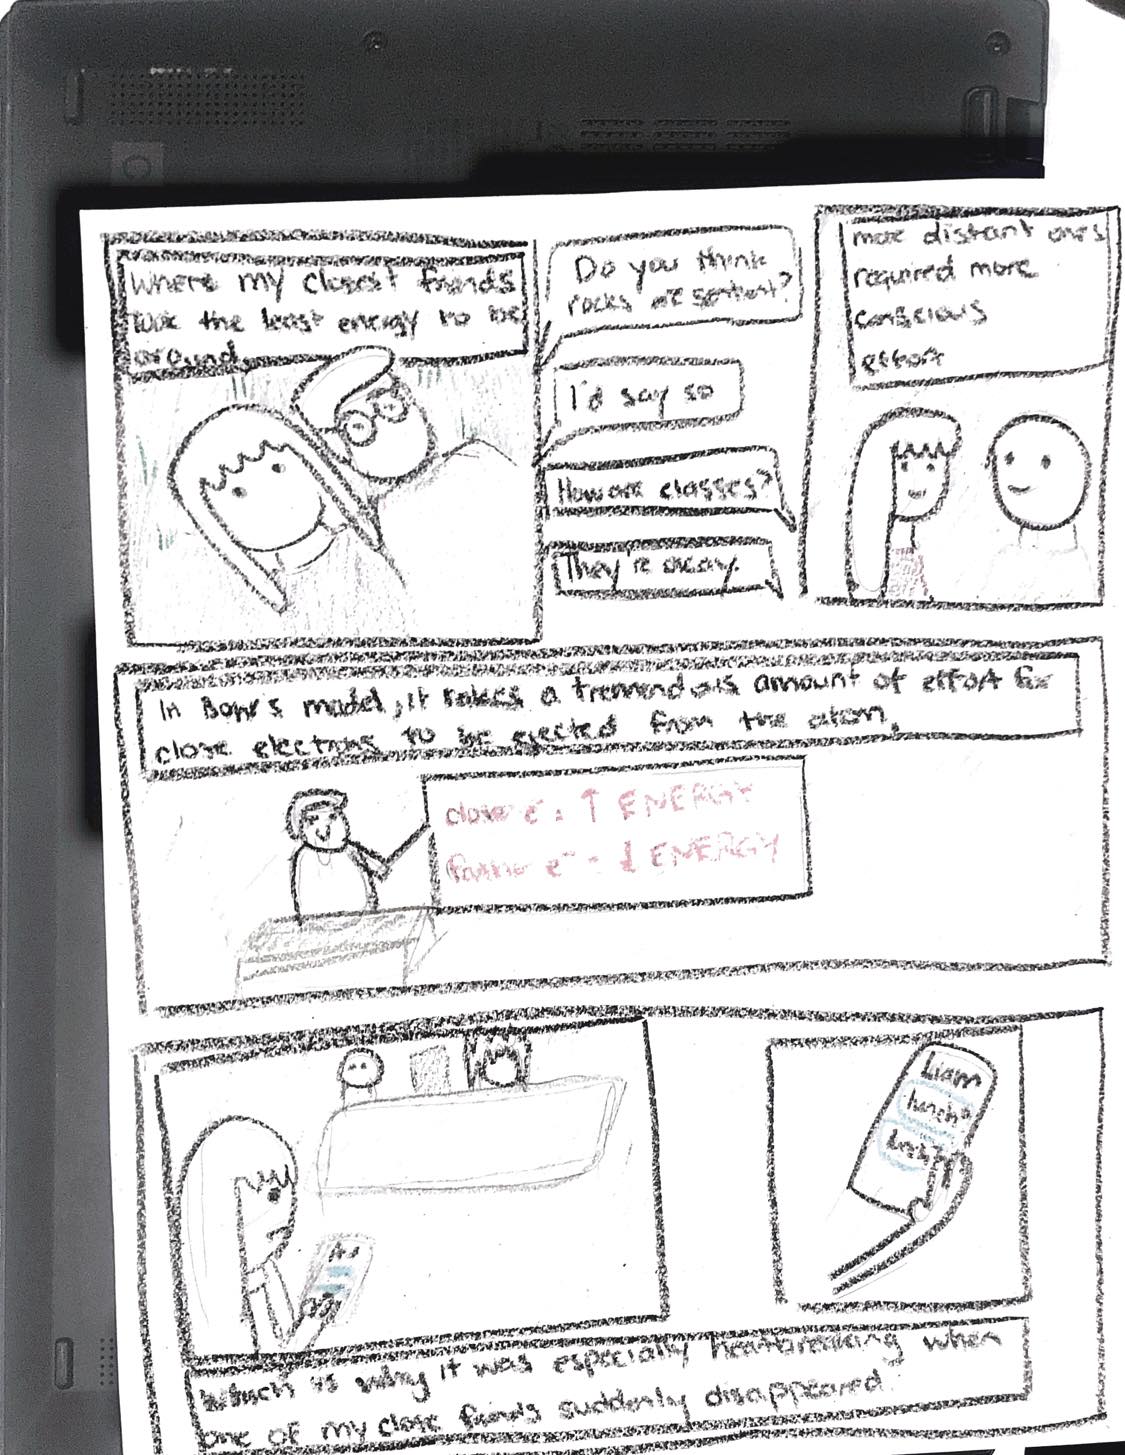 atomic friends page 2, the script of the comic is written below